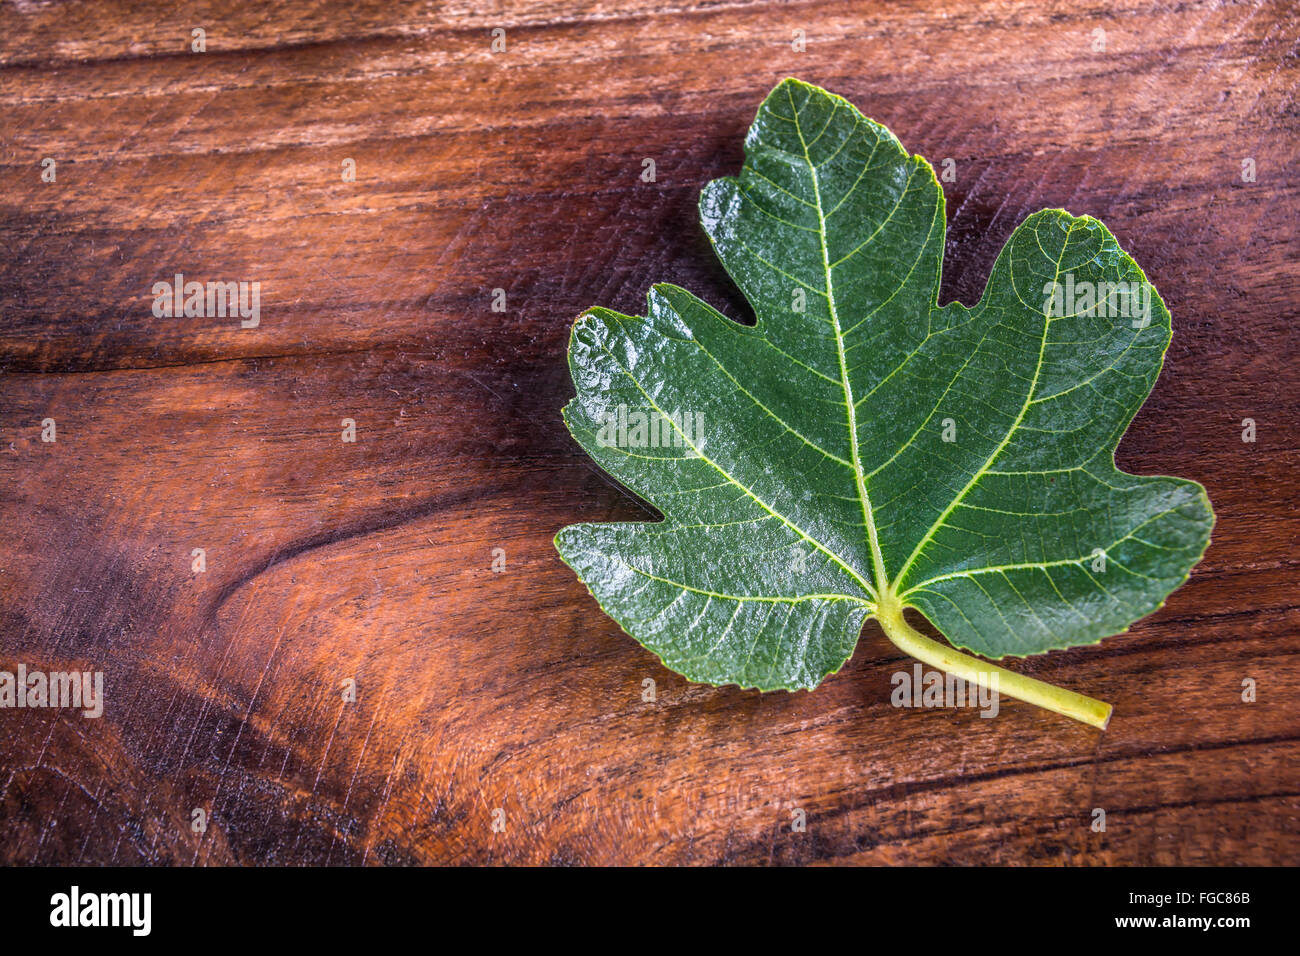 Black-Jack-Feigen-Blatt sieht aus wie Ahornblatt auf Teak Holz Stockfoto